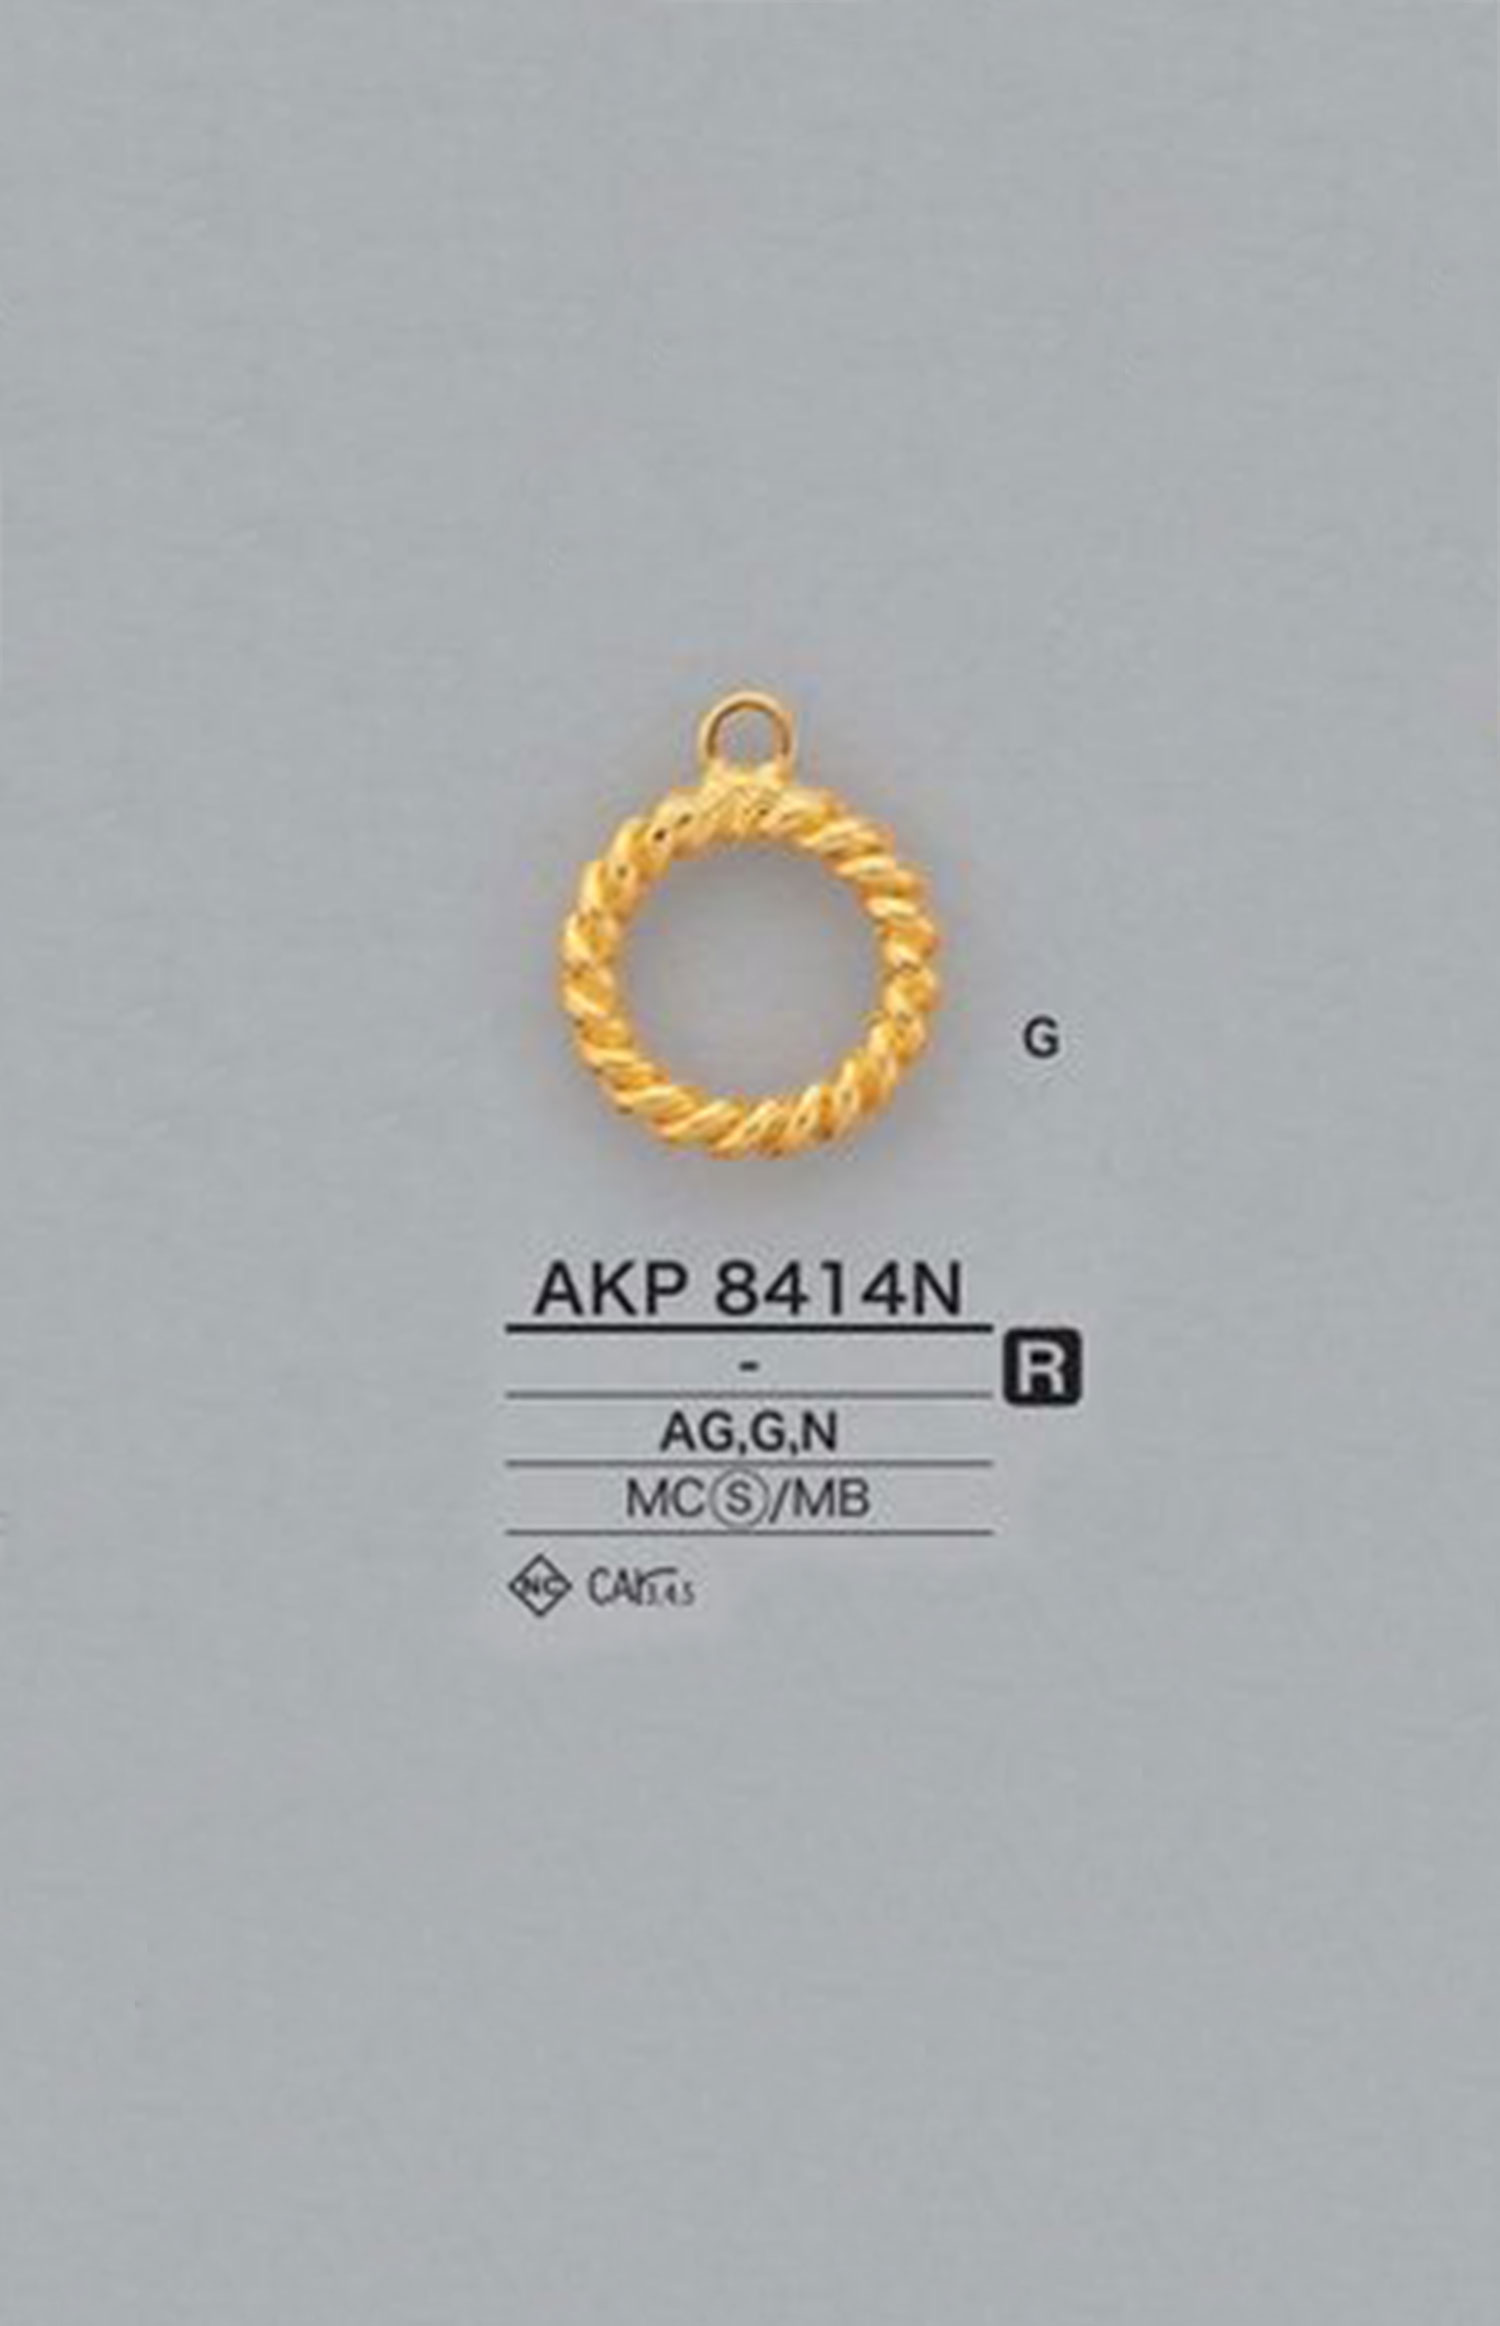 AKP8414N Ring Zipper Point (Pull Tab) IRIS